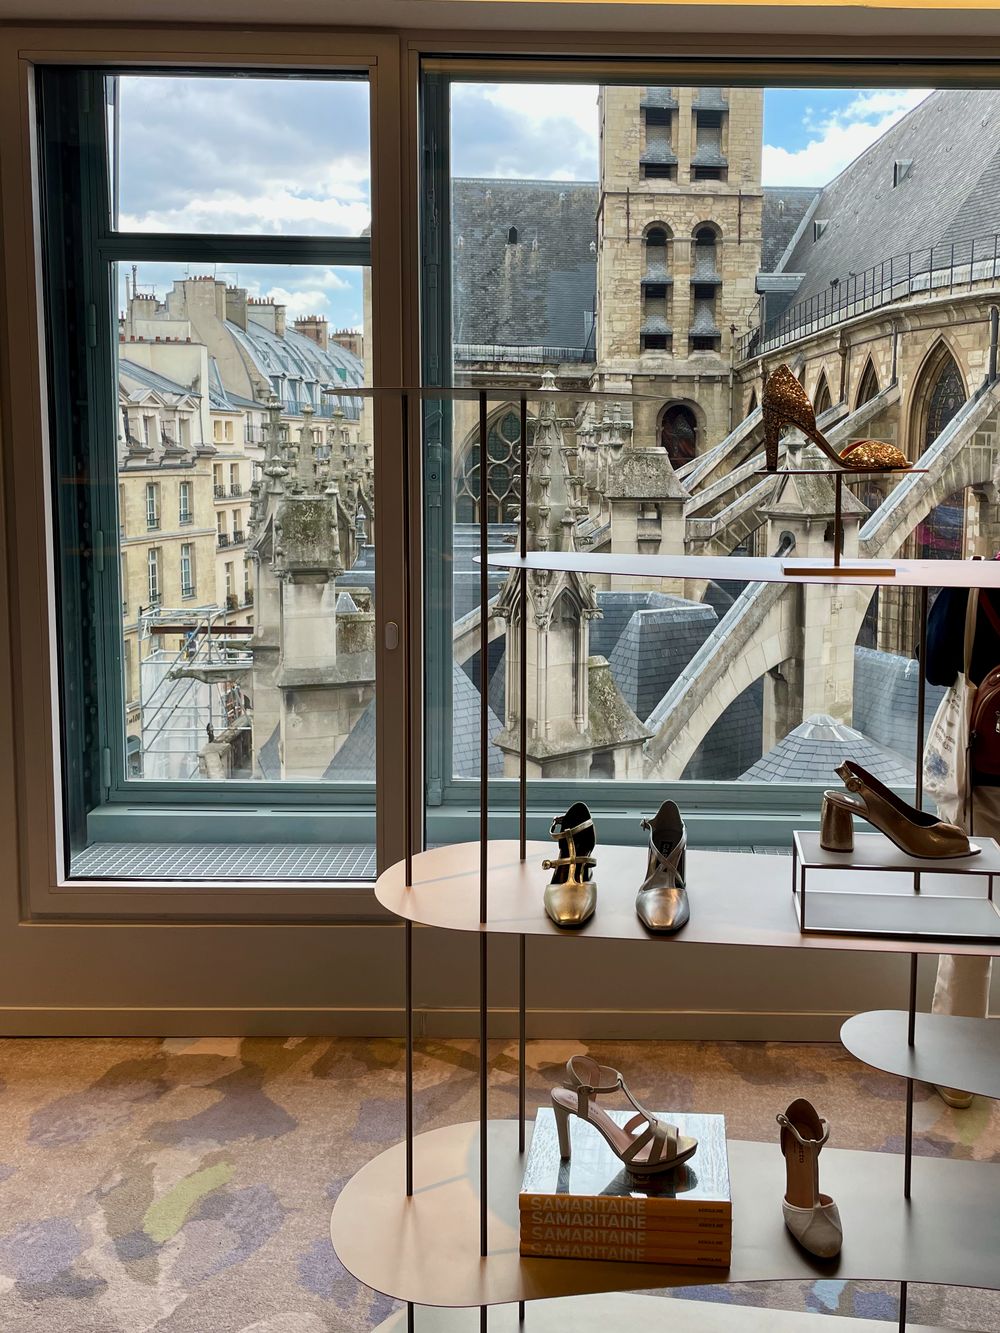 Views from La Samaritaine Paris department store